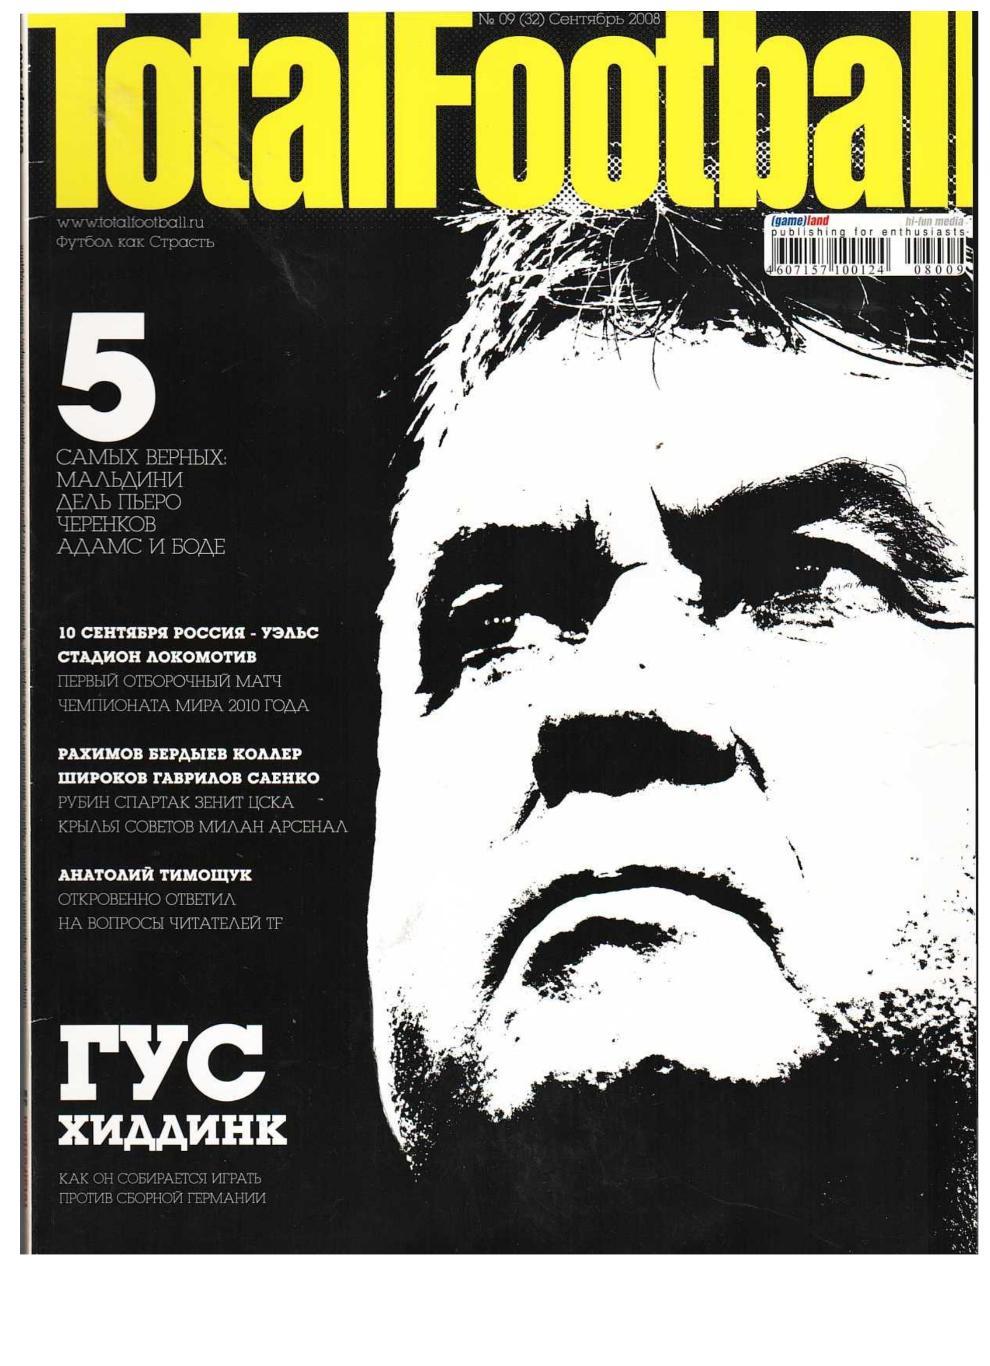 TotalFootball 2008, № 9, сентябрь.